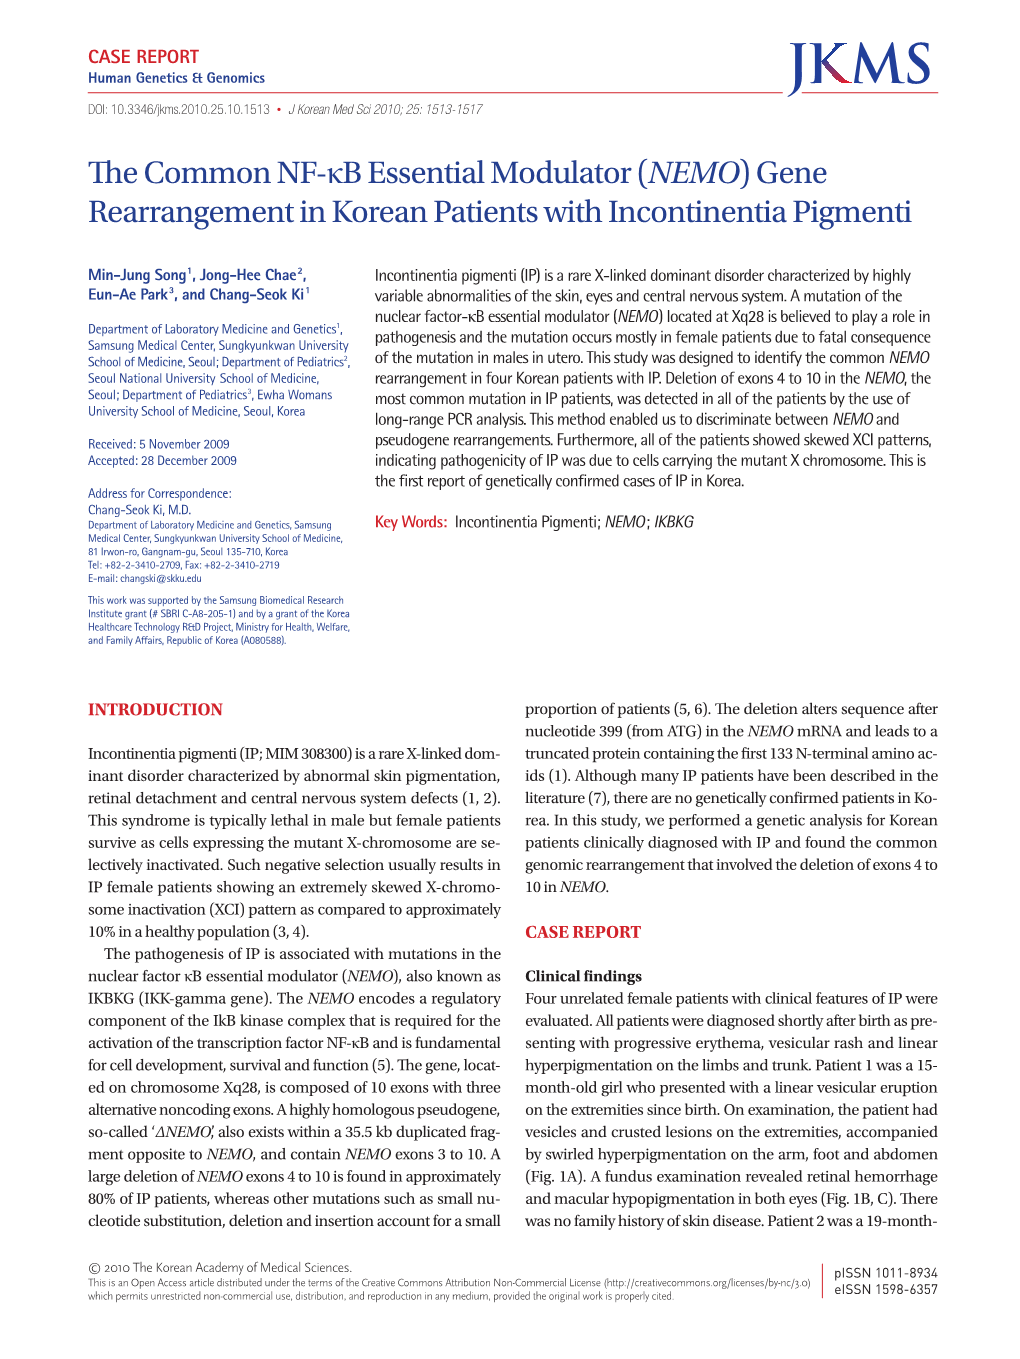 NEMO) Gene Rearrangement in Korean Patients with Incontinentia Pigmenti